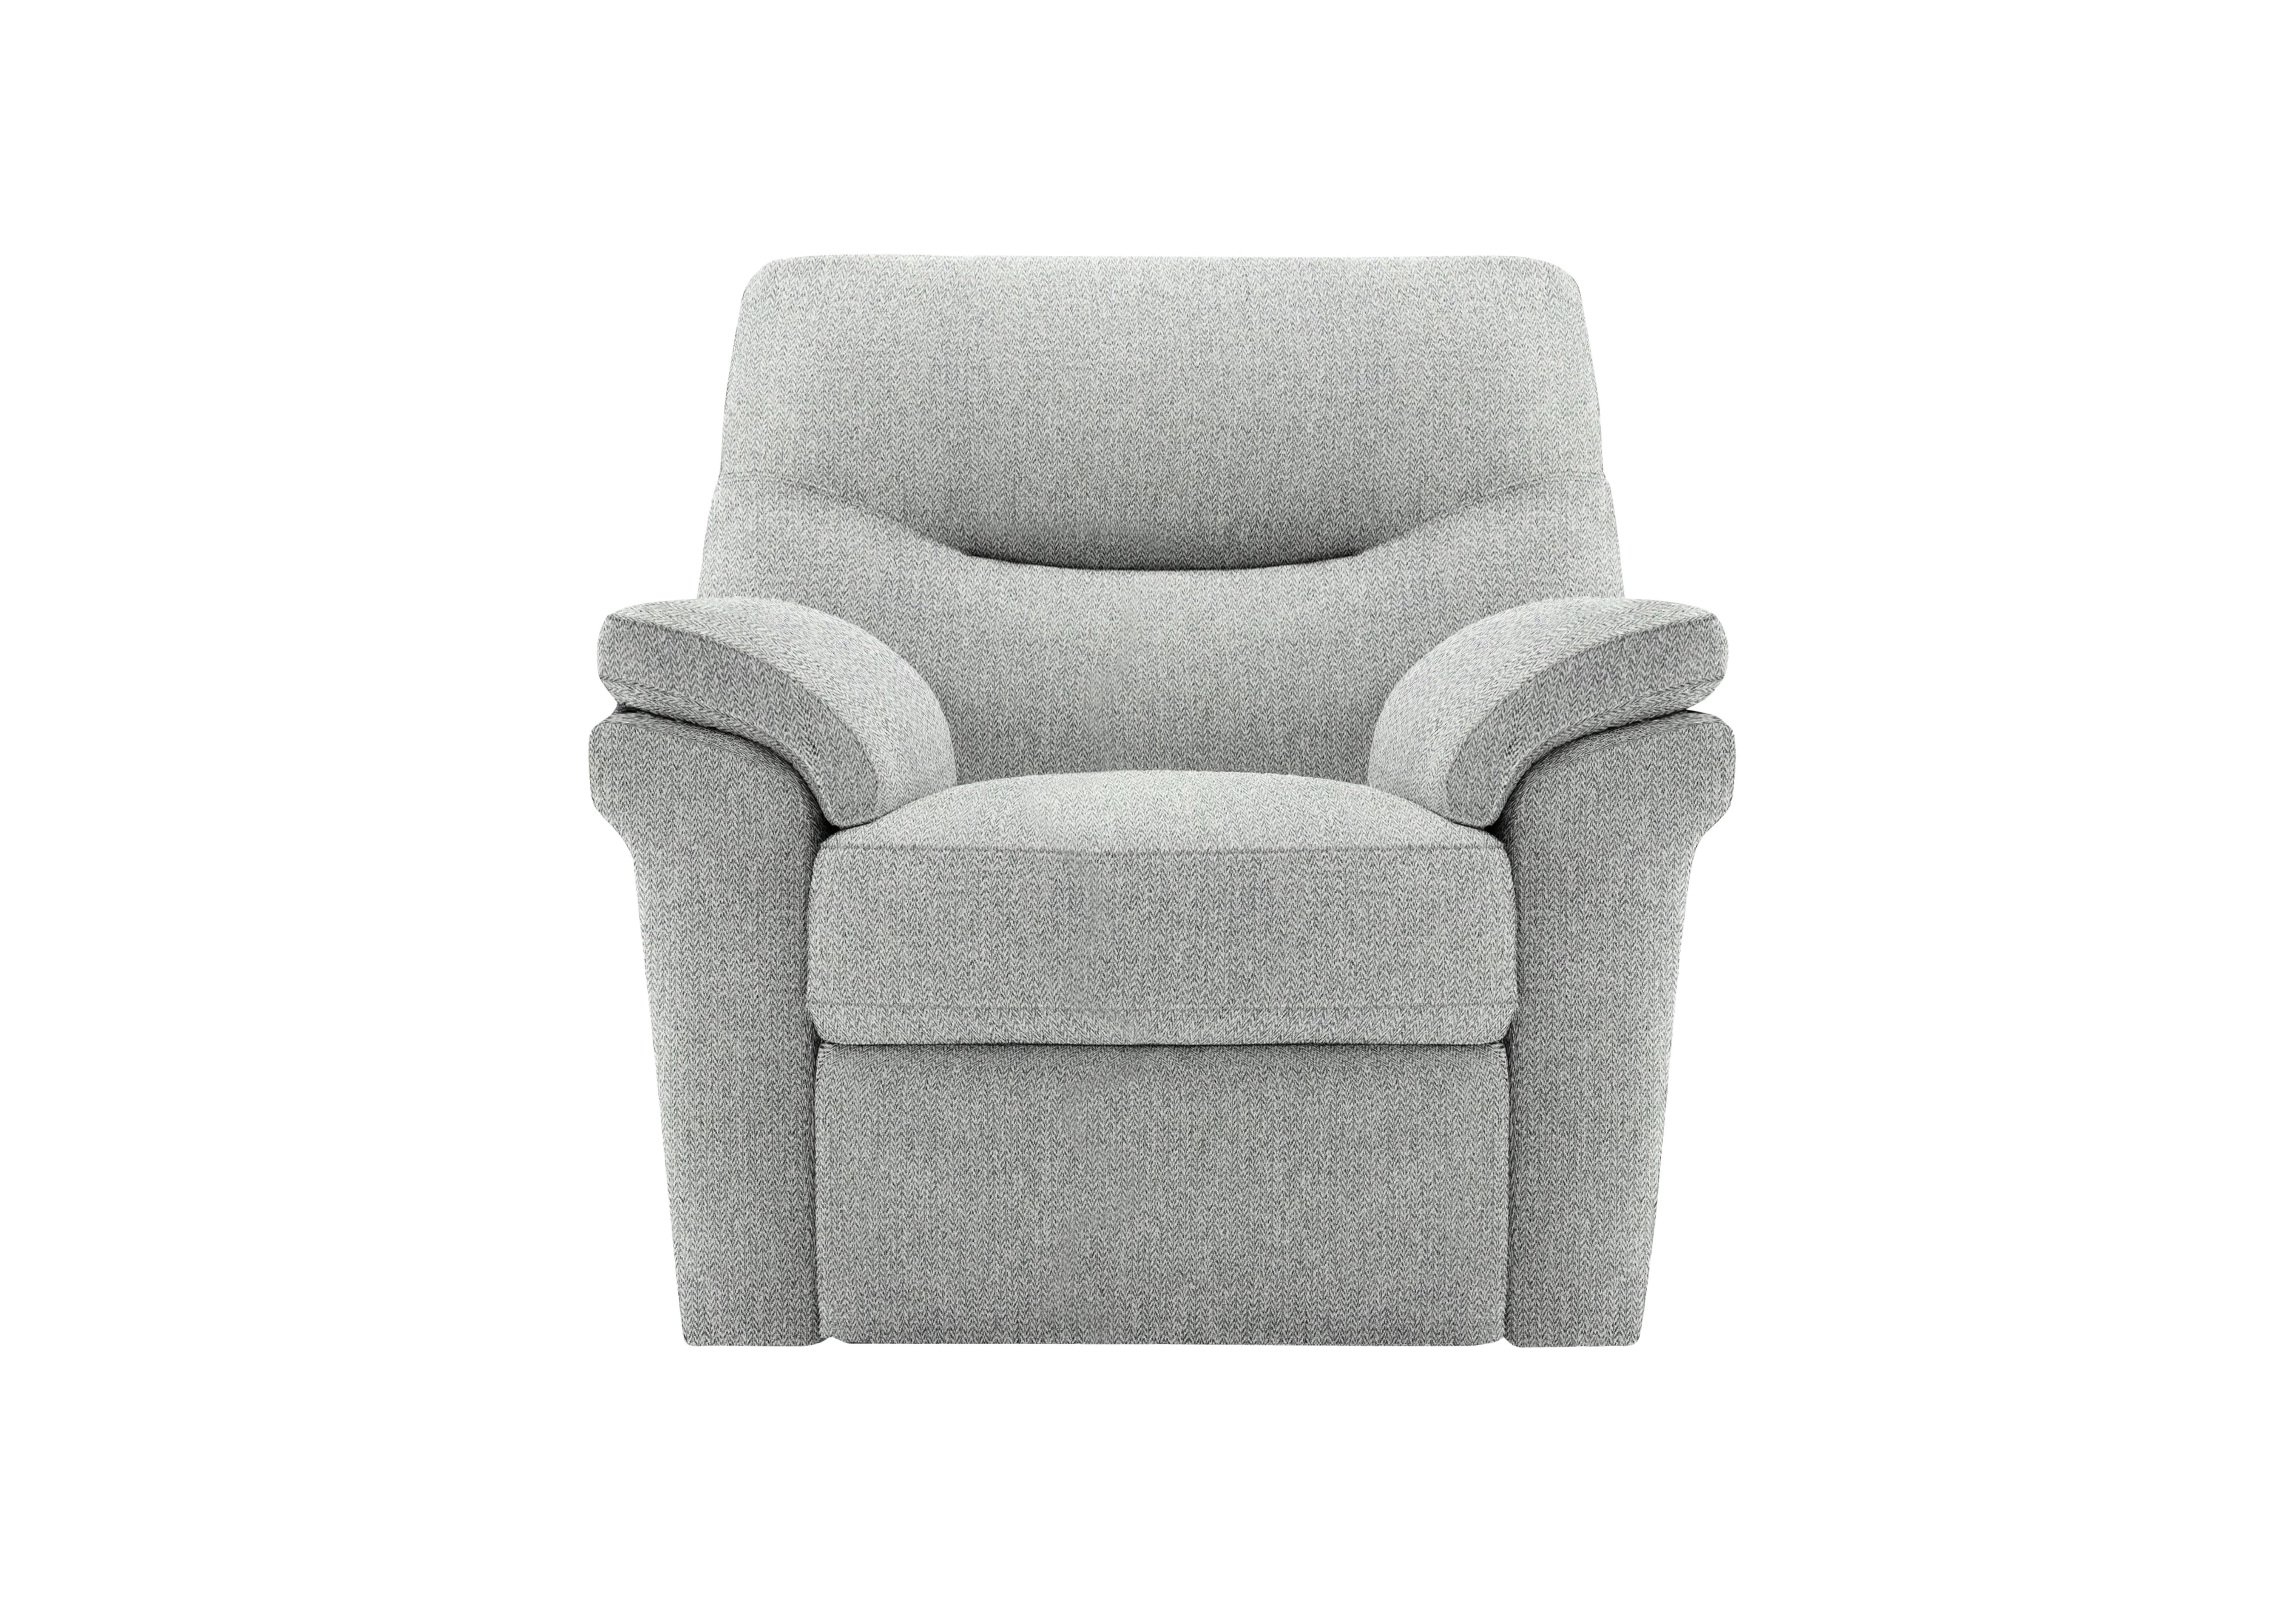 Seattle Fabric Armchair in A011 Swift Cygnet on Furniture Village